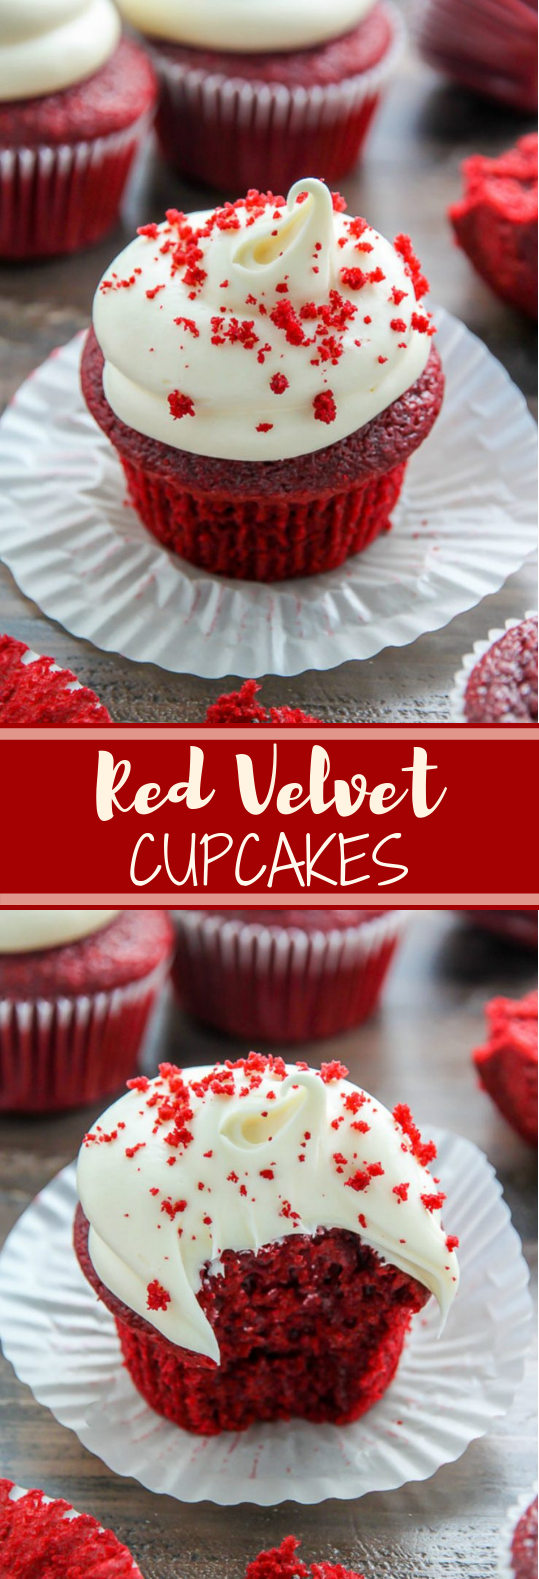 One Bowl Red Velvet Cupcakes #dessert #cupcakes